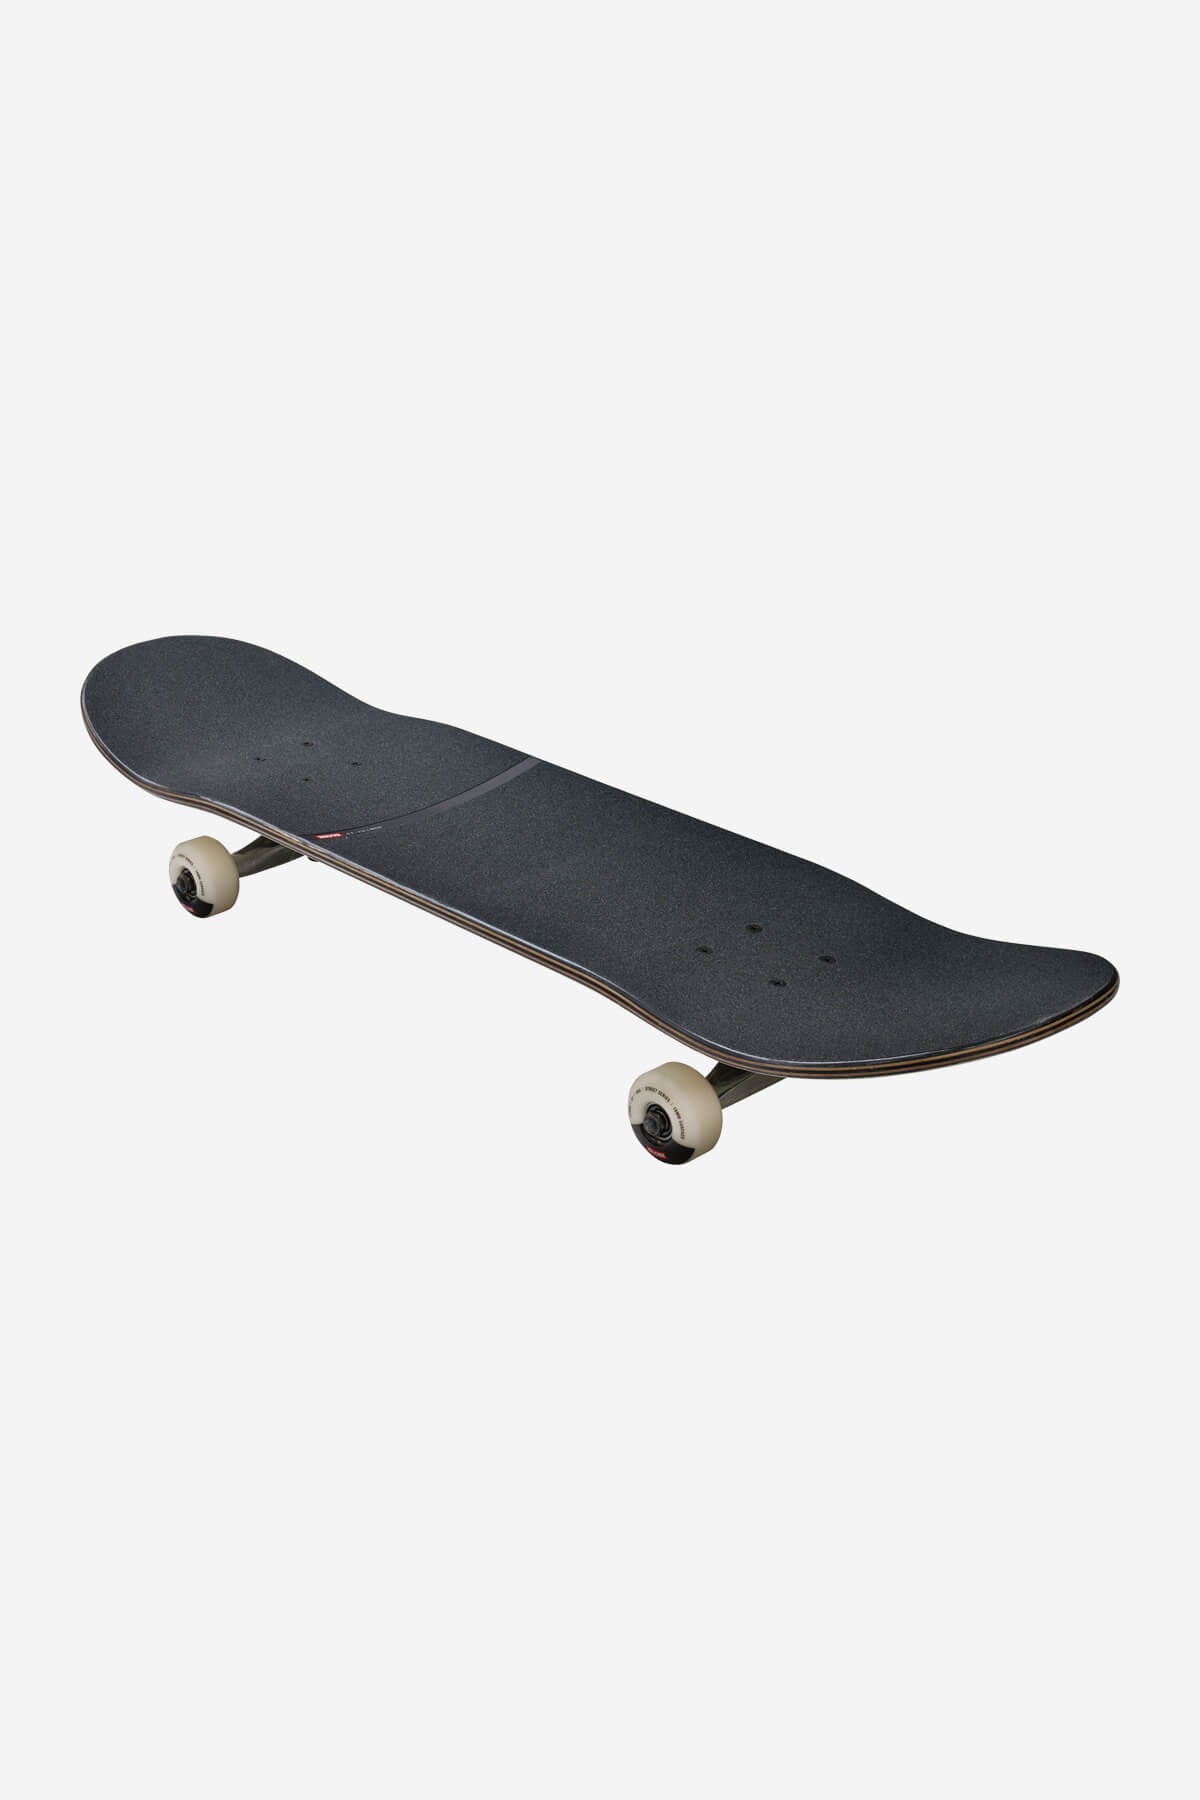 g1 lineform 2 off white 8.0" completo skateboard